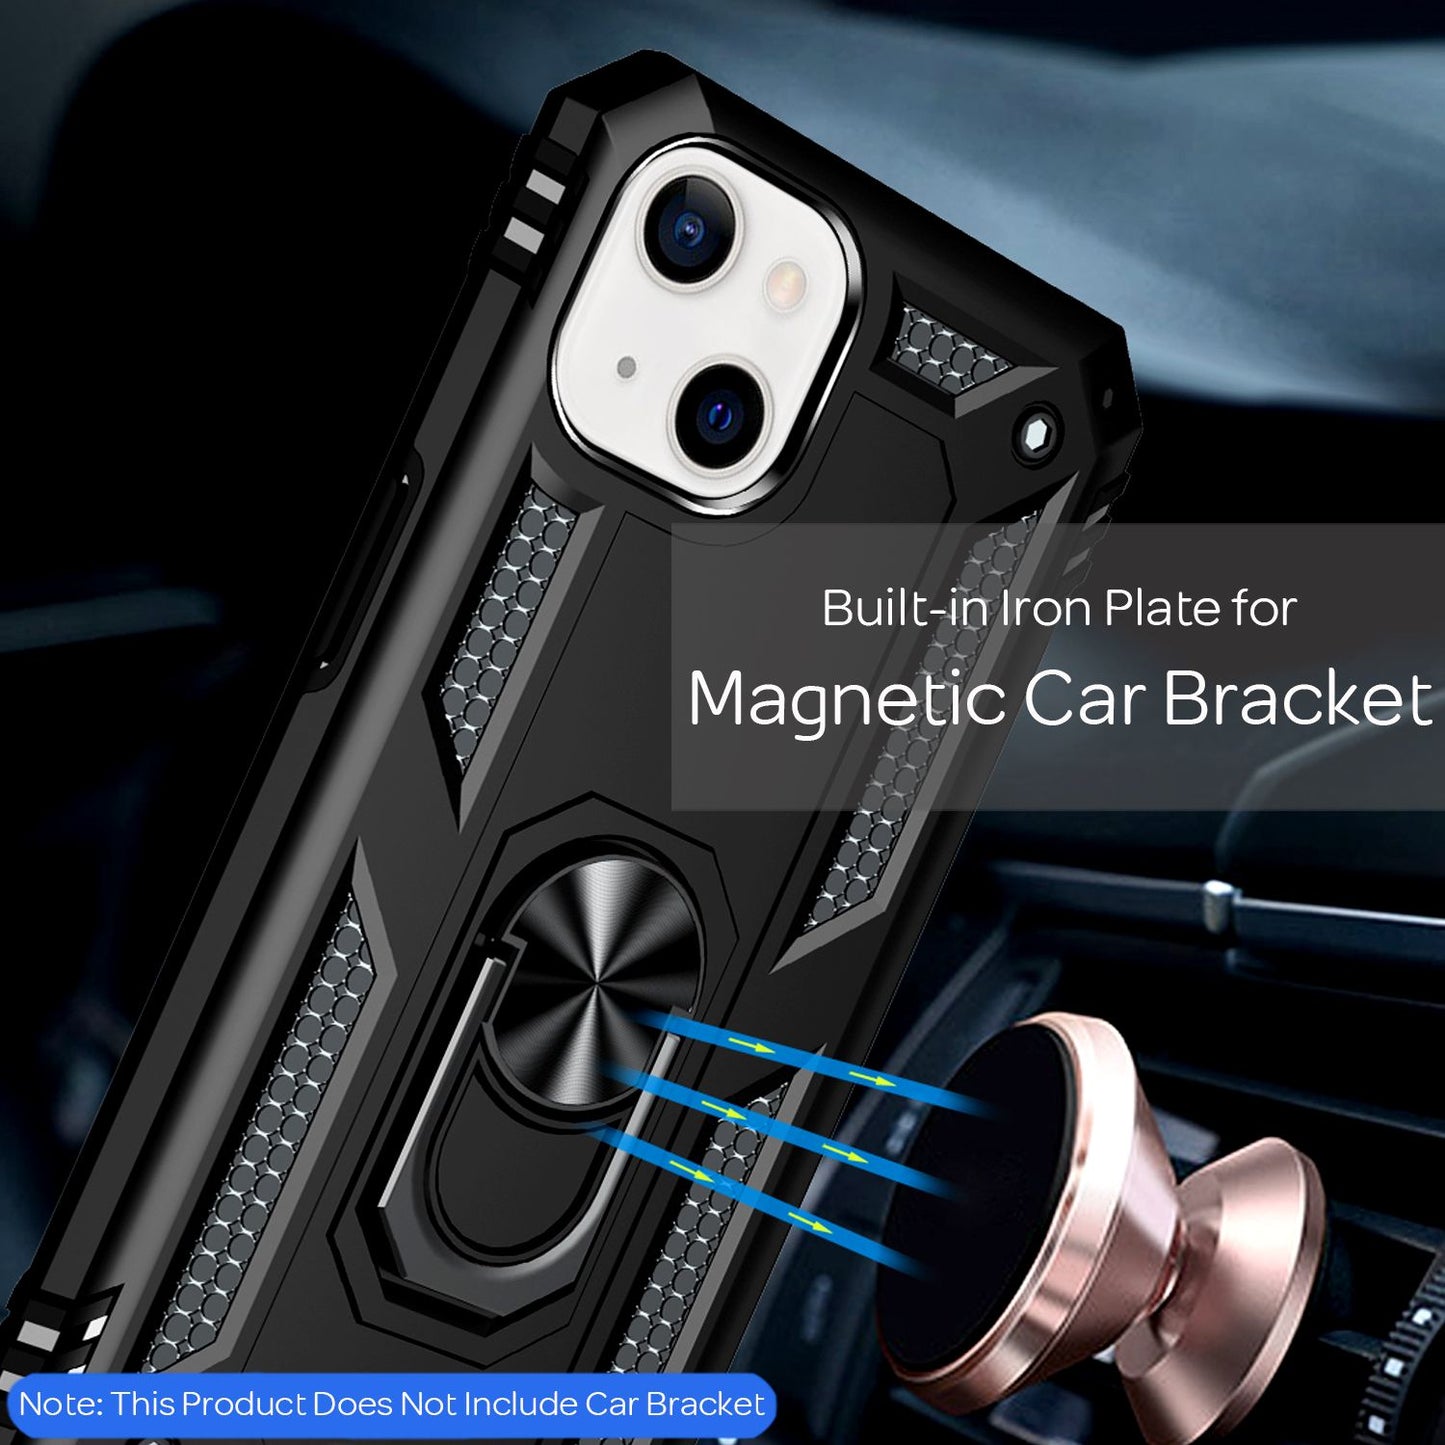 NALIA Ring Hülle für iPhone 13, Hard Case mit Silikon Bumper Cover Handyhülle